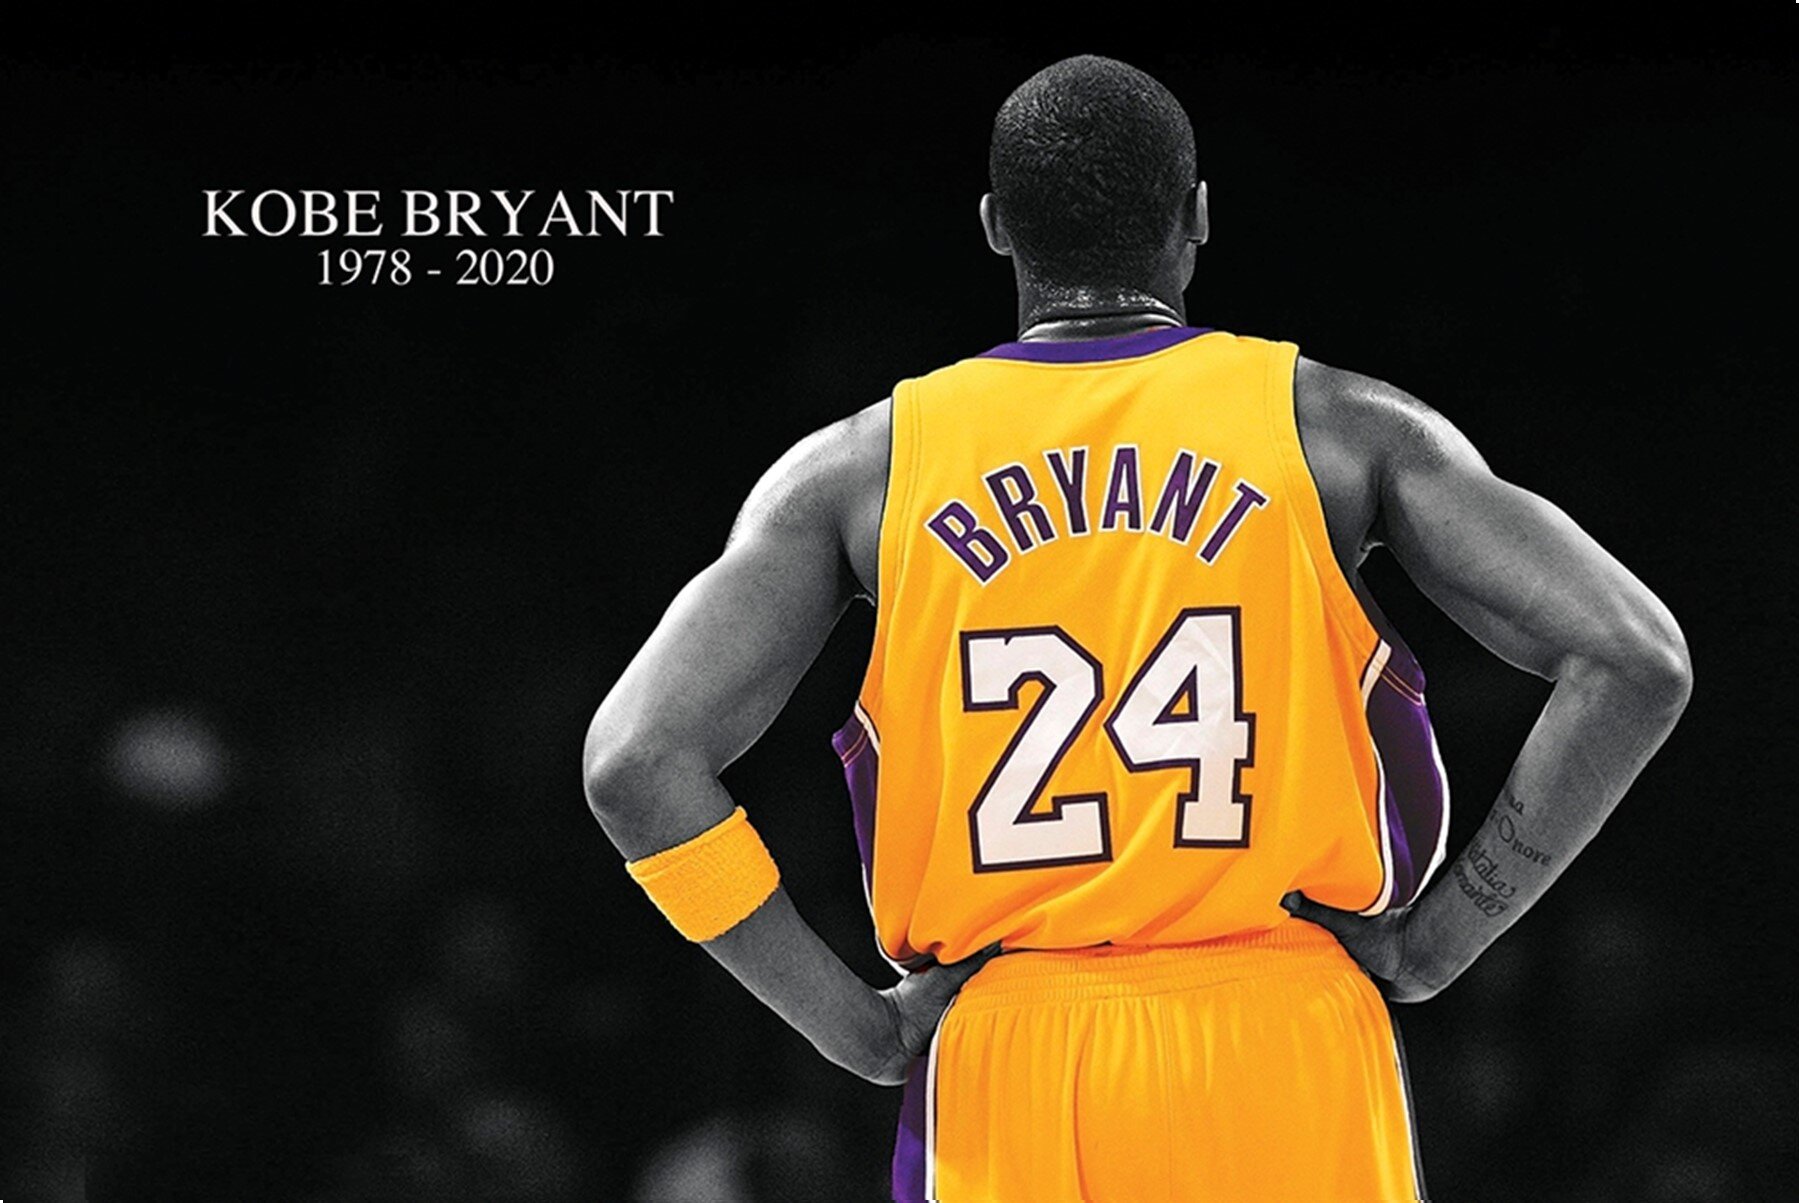 Kobe Bryant Free Throw Art - Row One Brand